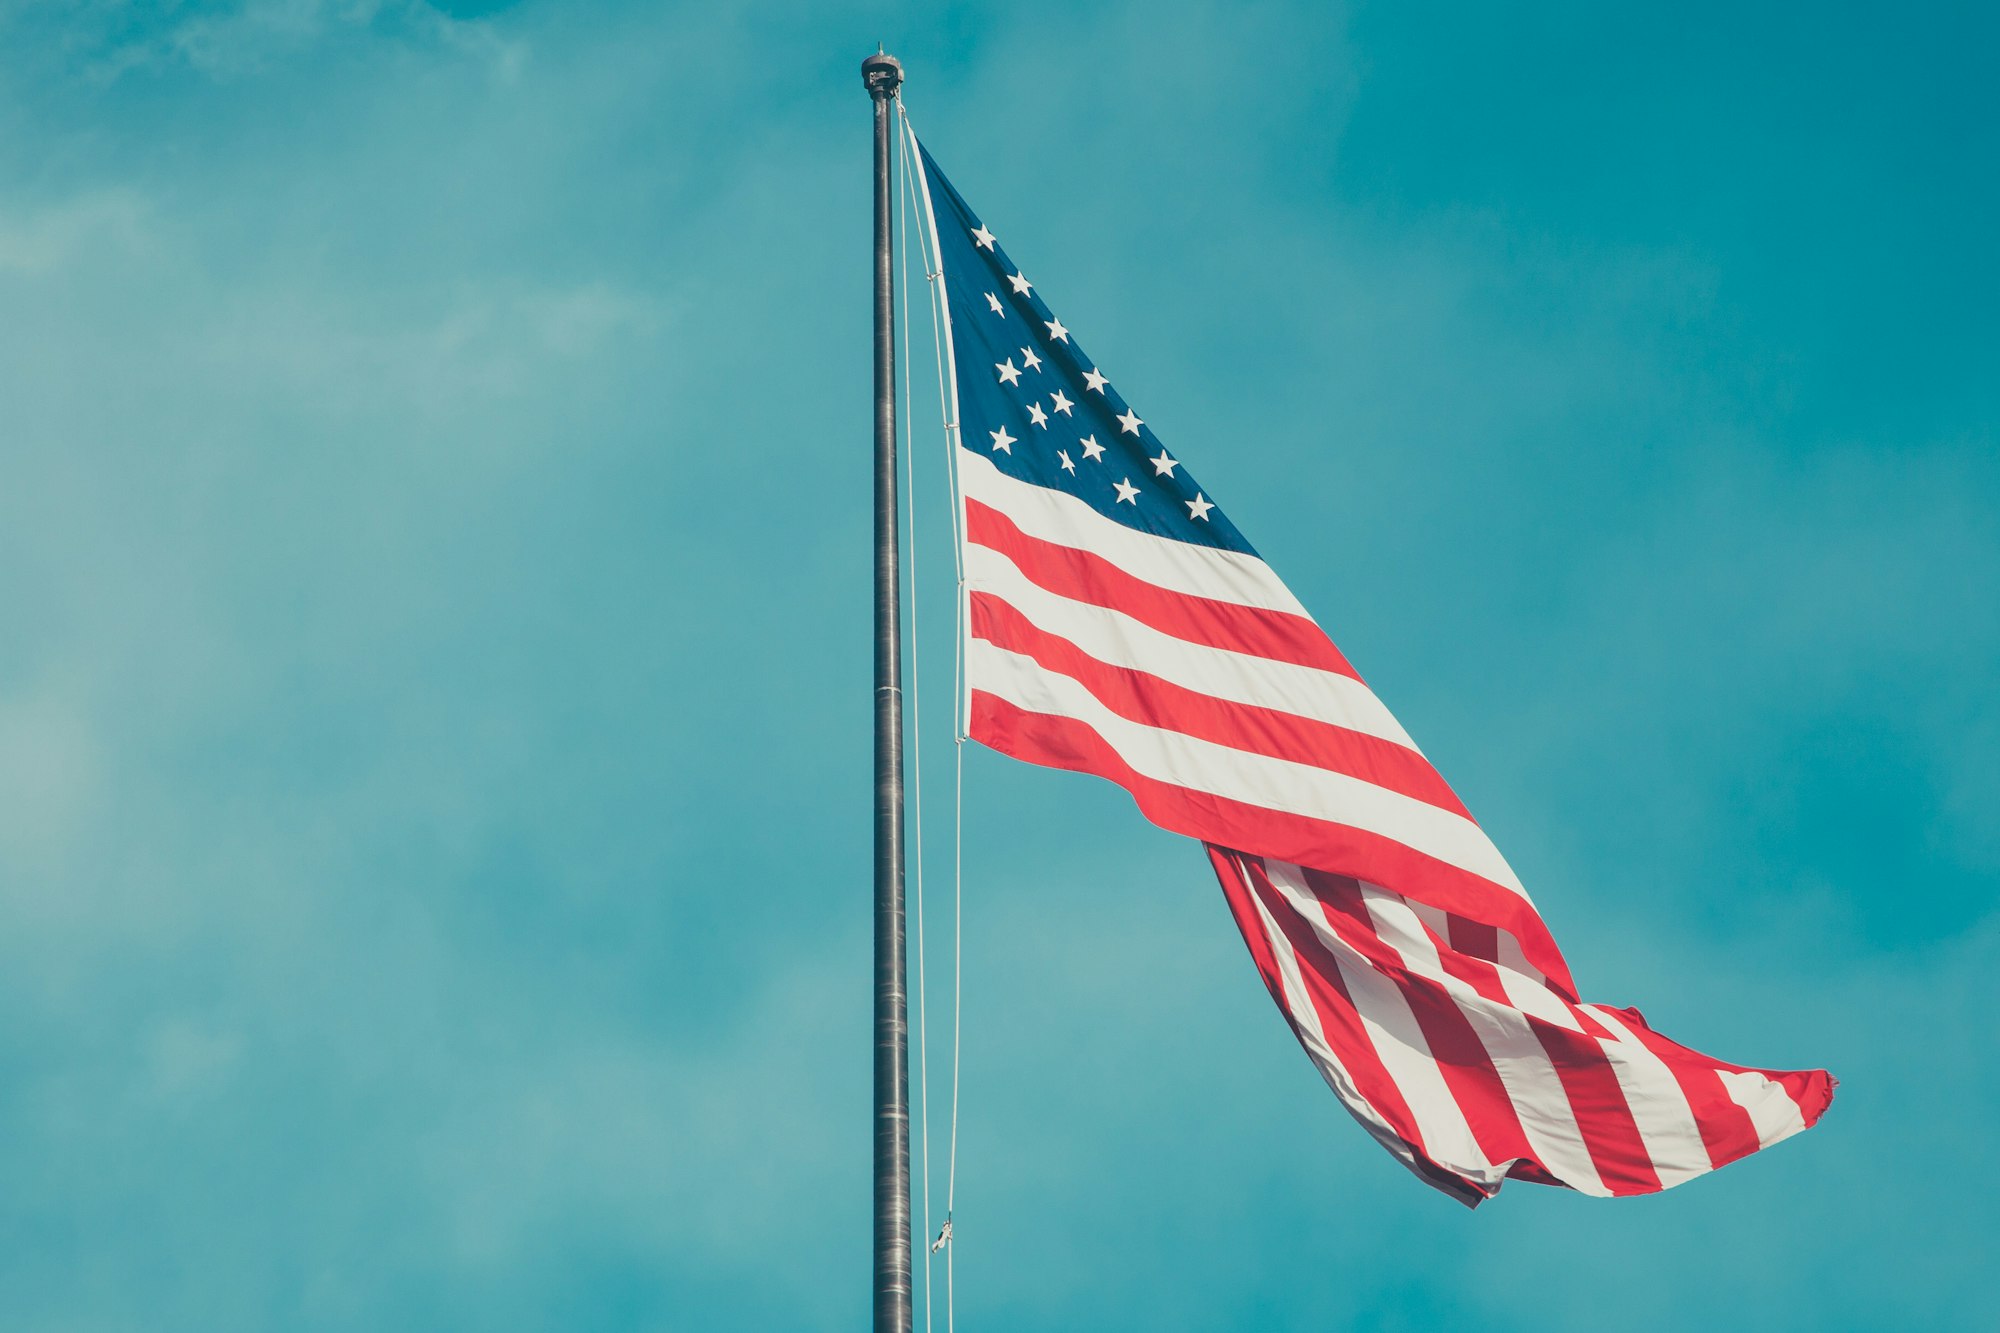 An American flag against a blue sky background